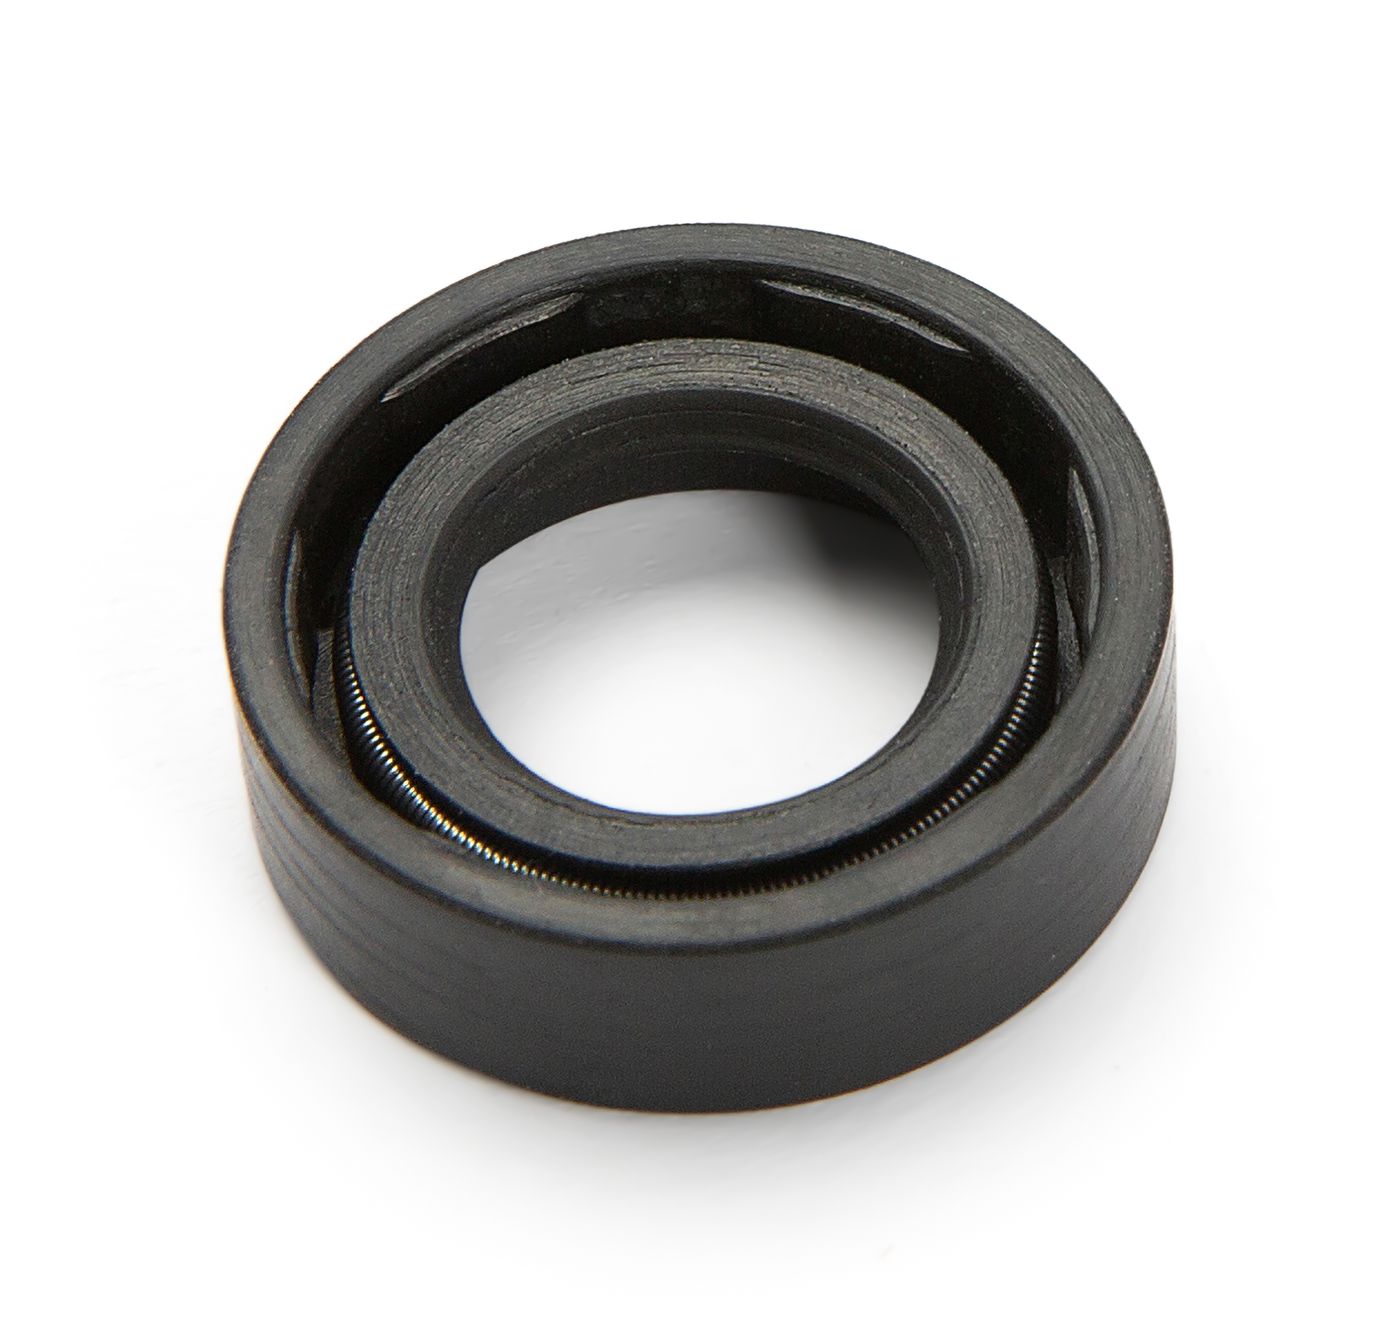 Dichtring
Sealing ring
Joint circulaire
Pierścień uszczelniaj